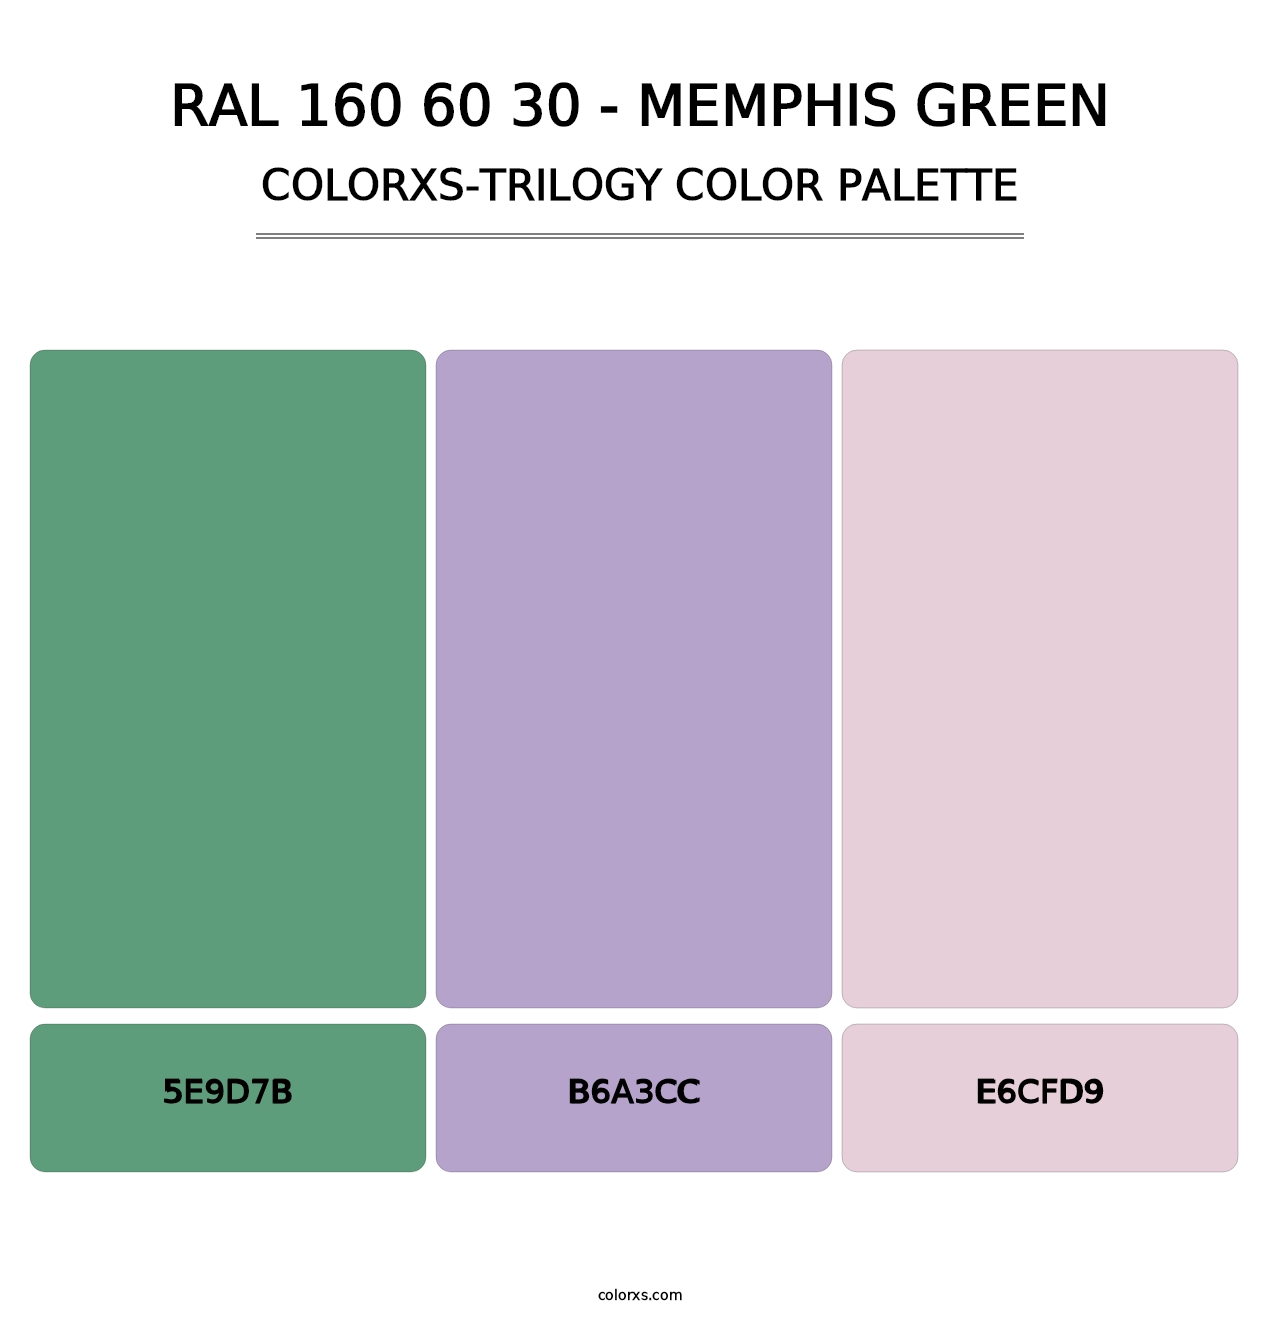 RAL 160 60 30 - Memphis Green - Colorxs Trilogy Palette